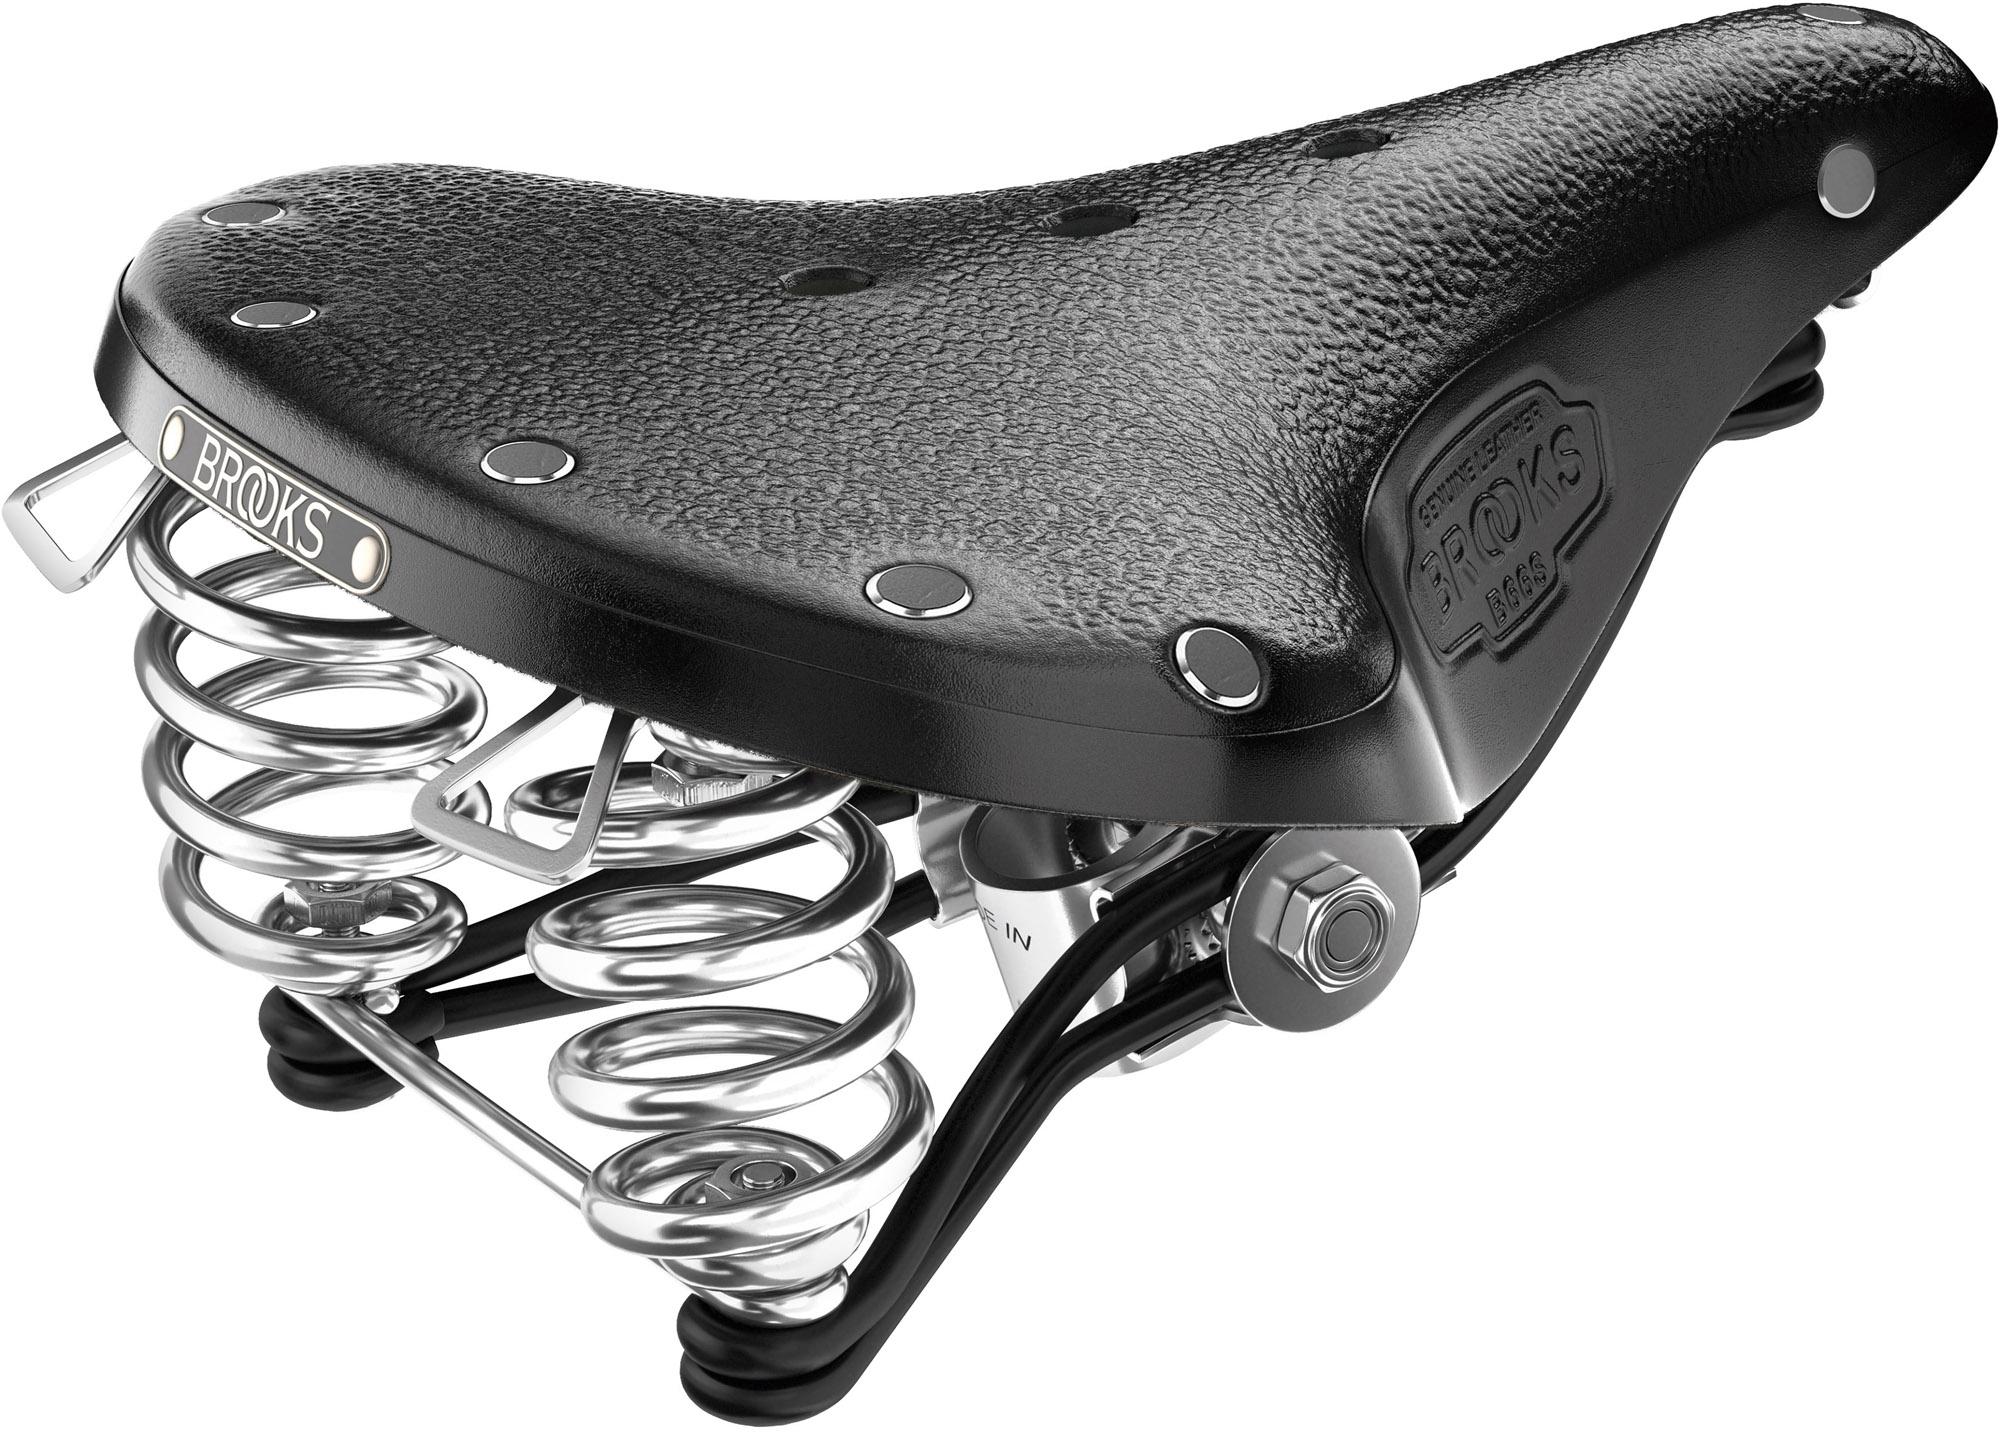 Brooks England B66 Short Bike Saddle With Steel Rails - Black/chrome